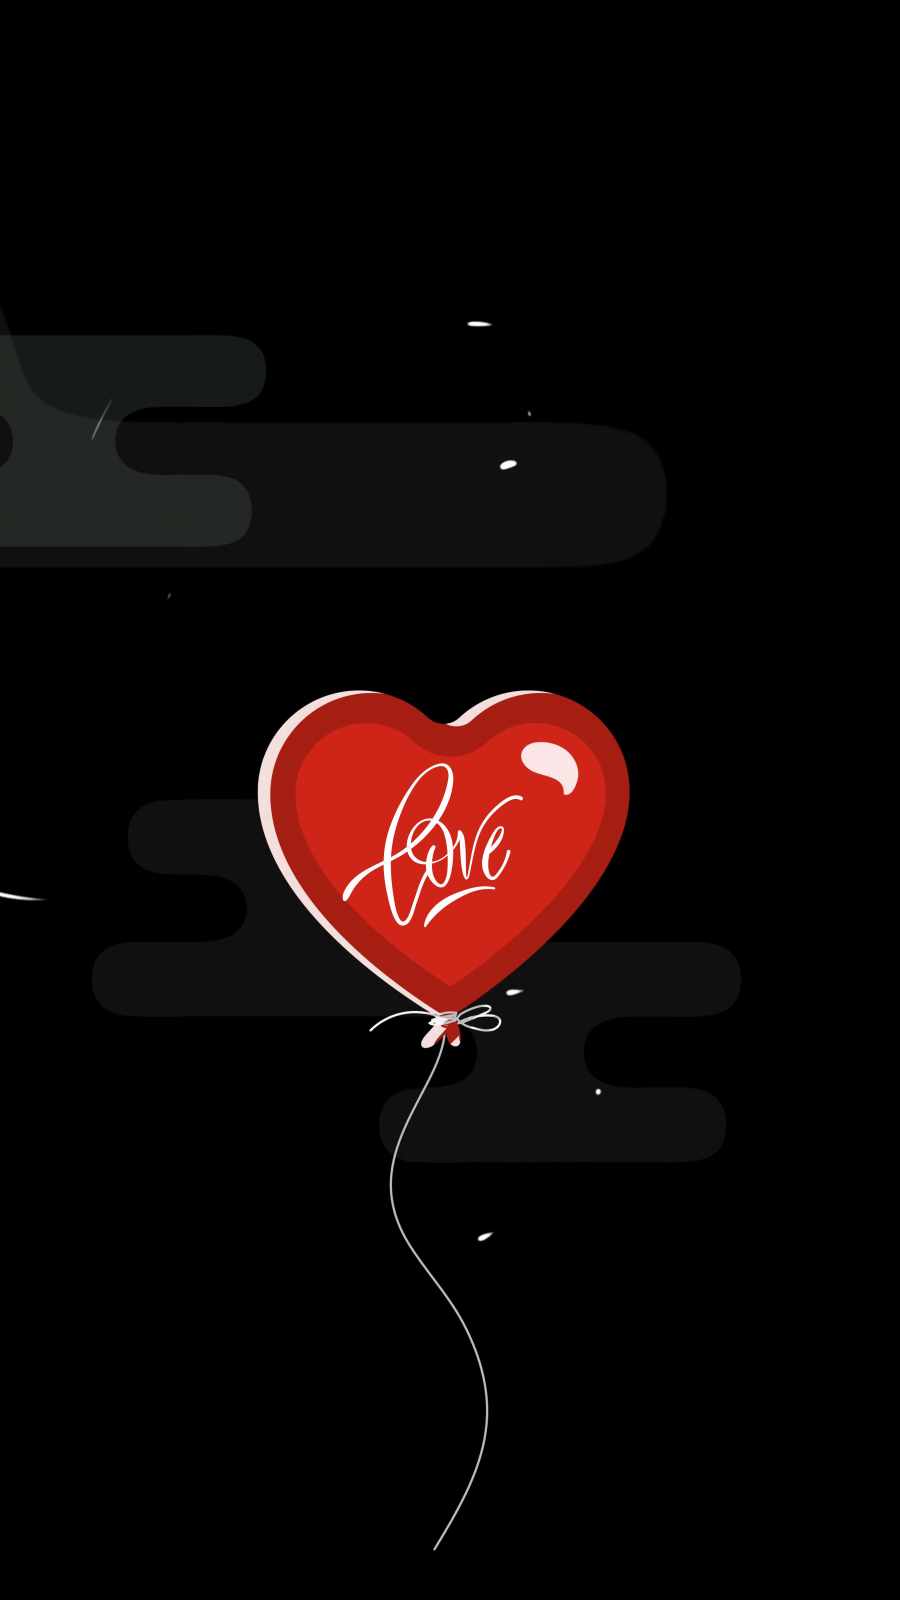 Love Balloon iPhone Wallpaper